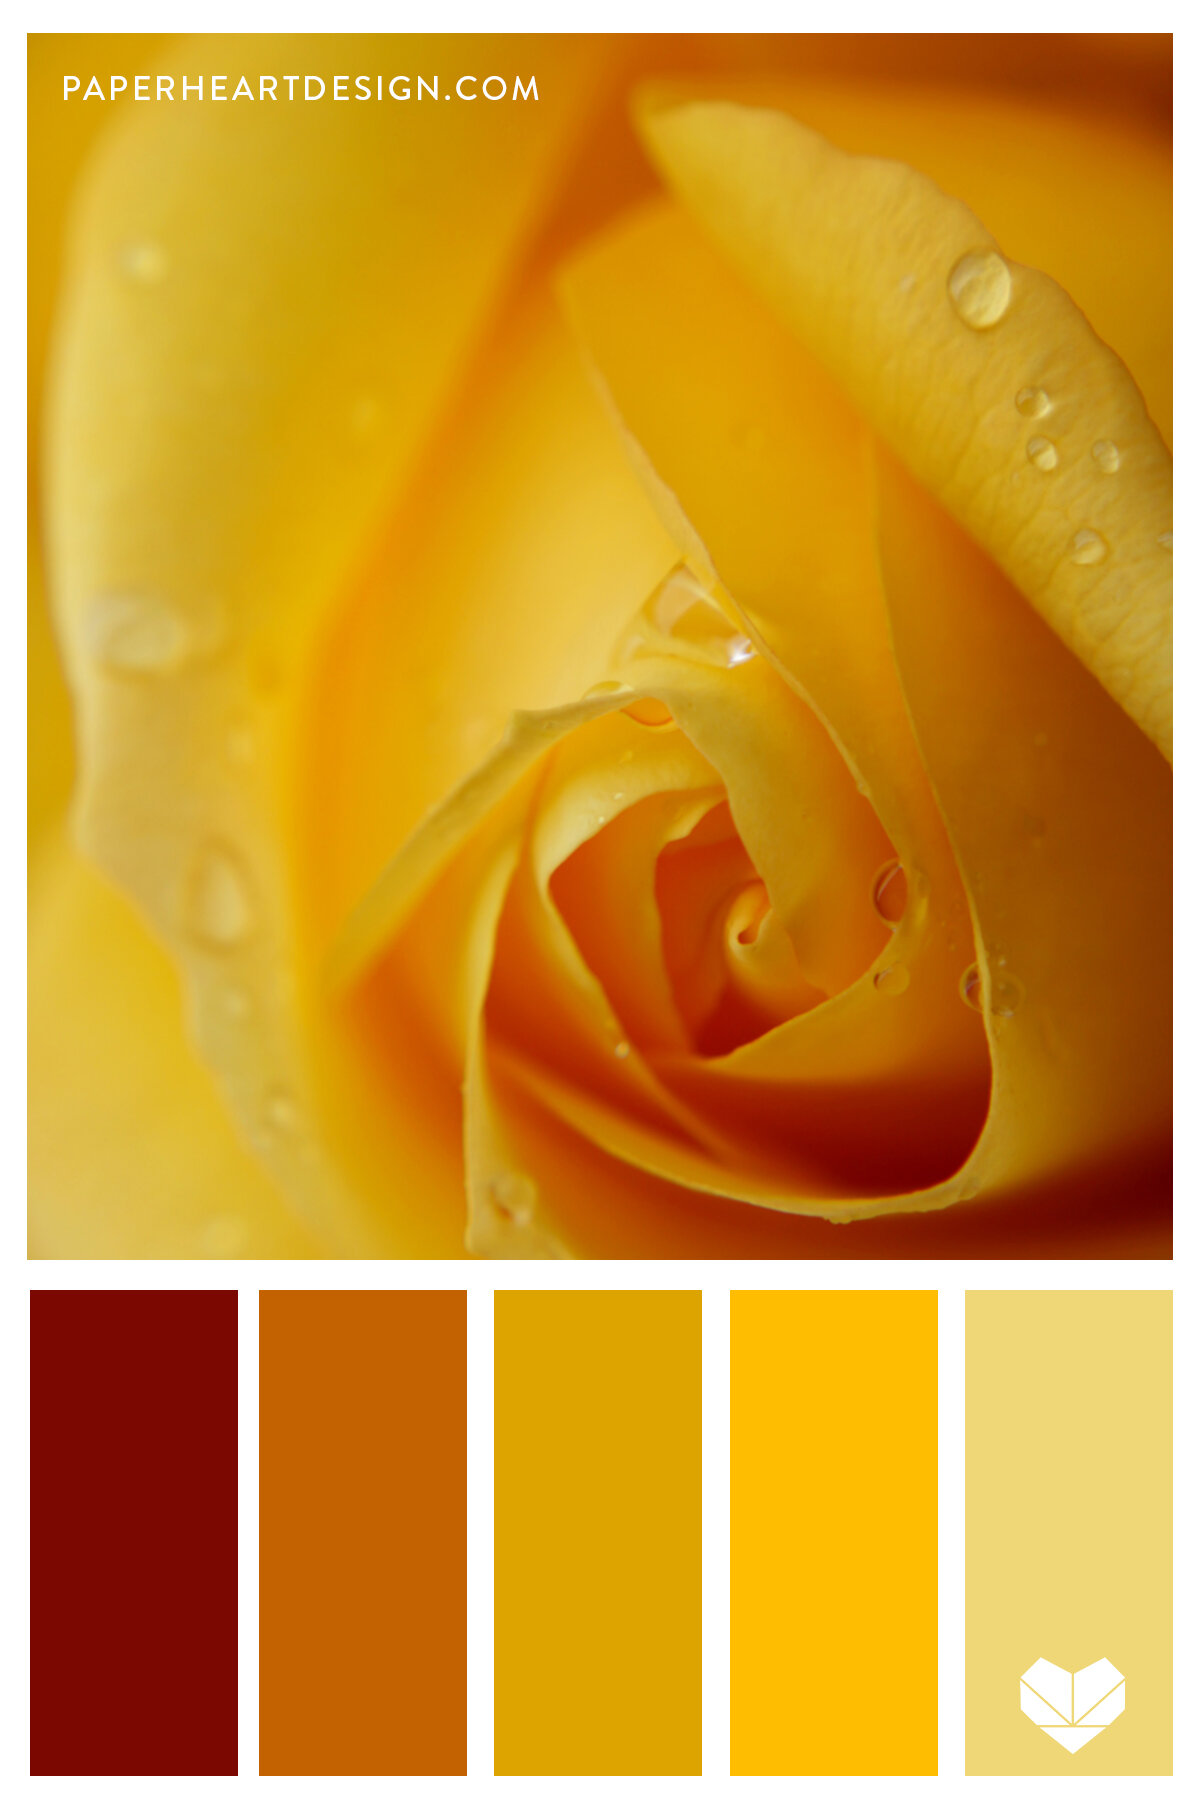 https://images.squarespace-cdn.com/content/v1/5720ede5555986b16f146642/1594410426682-CQCVAWGID8D3RQ7TCRJY/Yellow-Rose.jpg